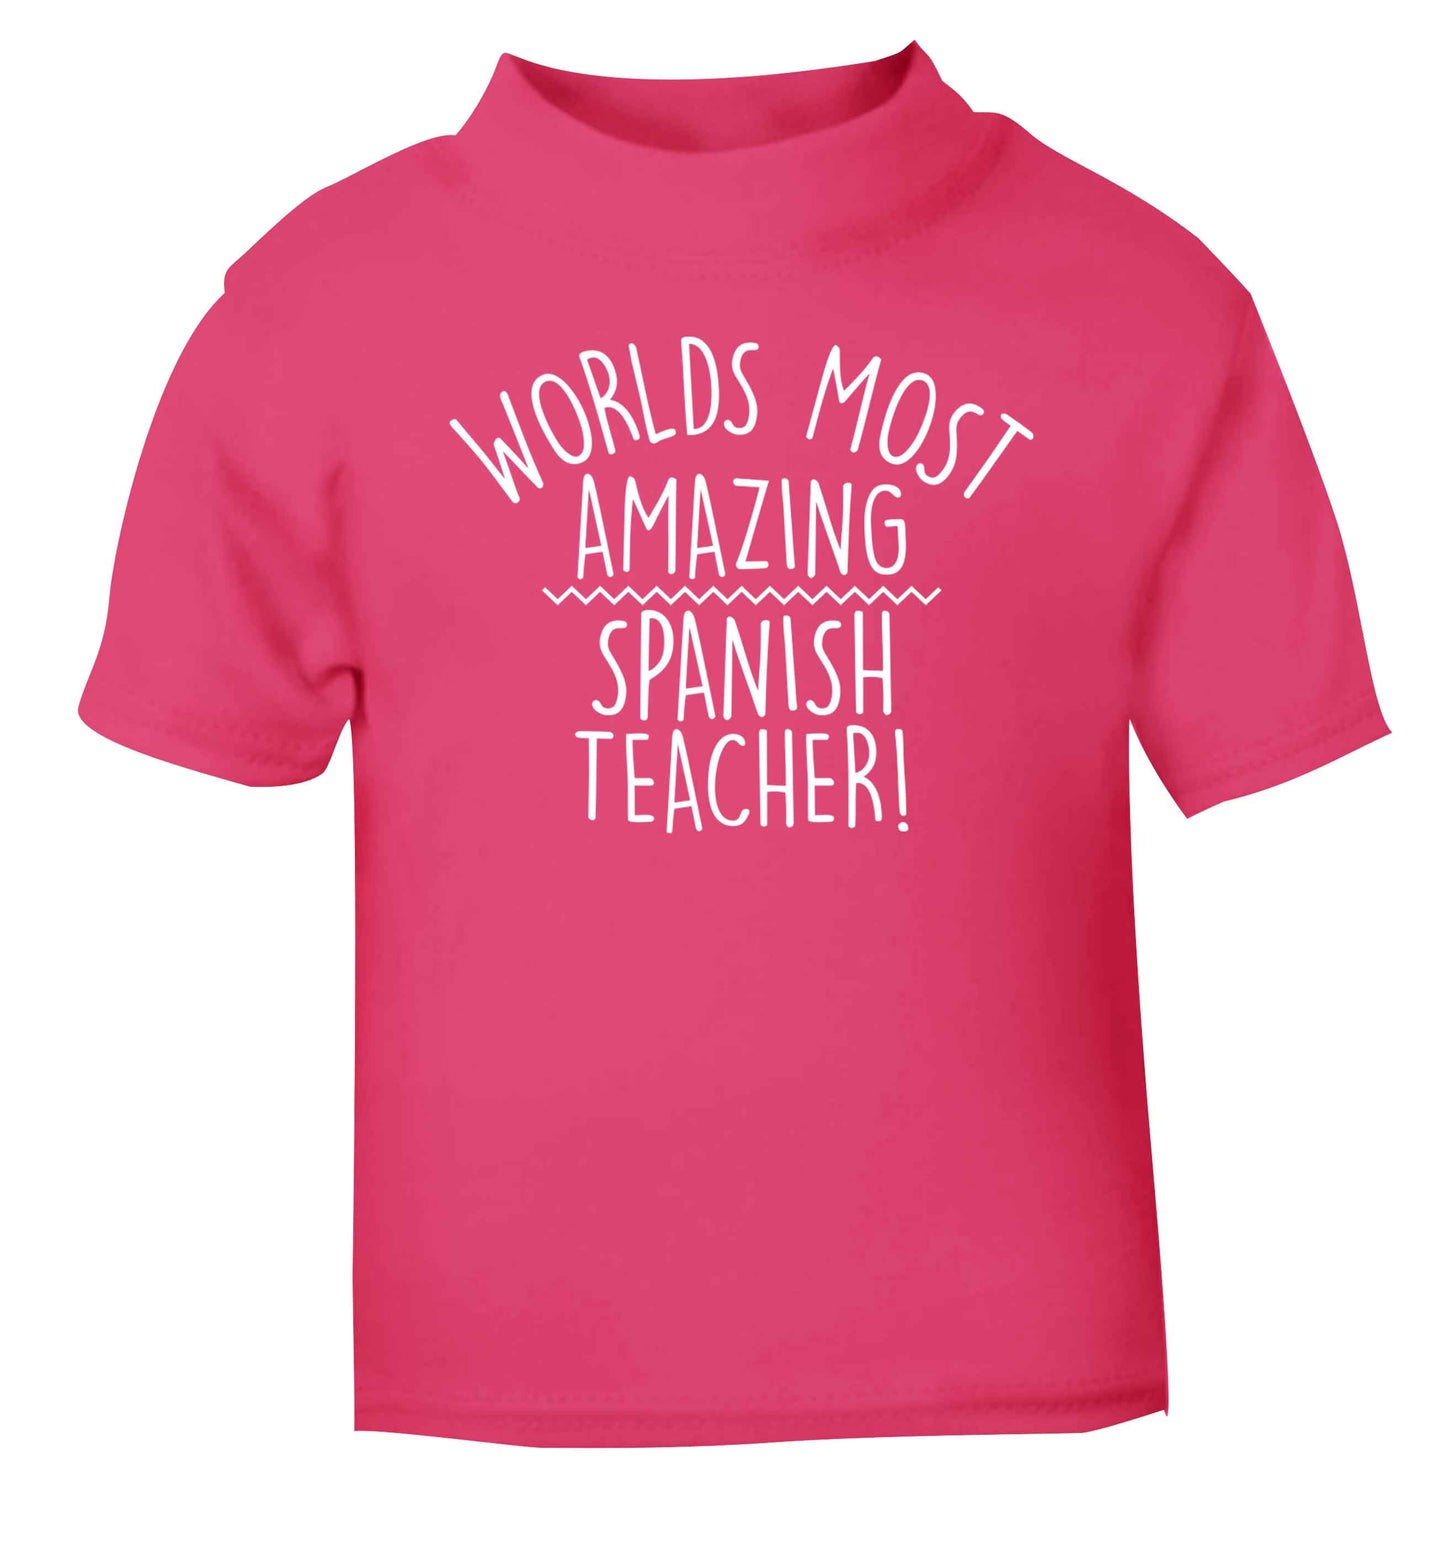 Worlds most amazing Spanish teacher pink baby toddler Tshirt 2 Years